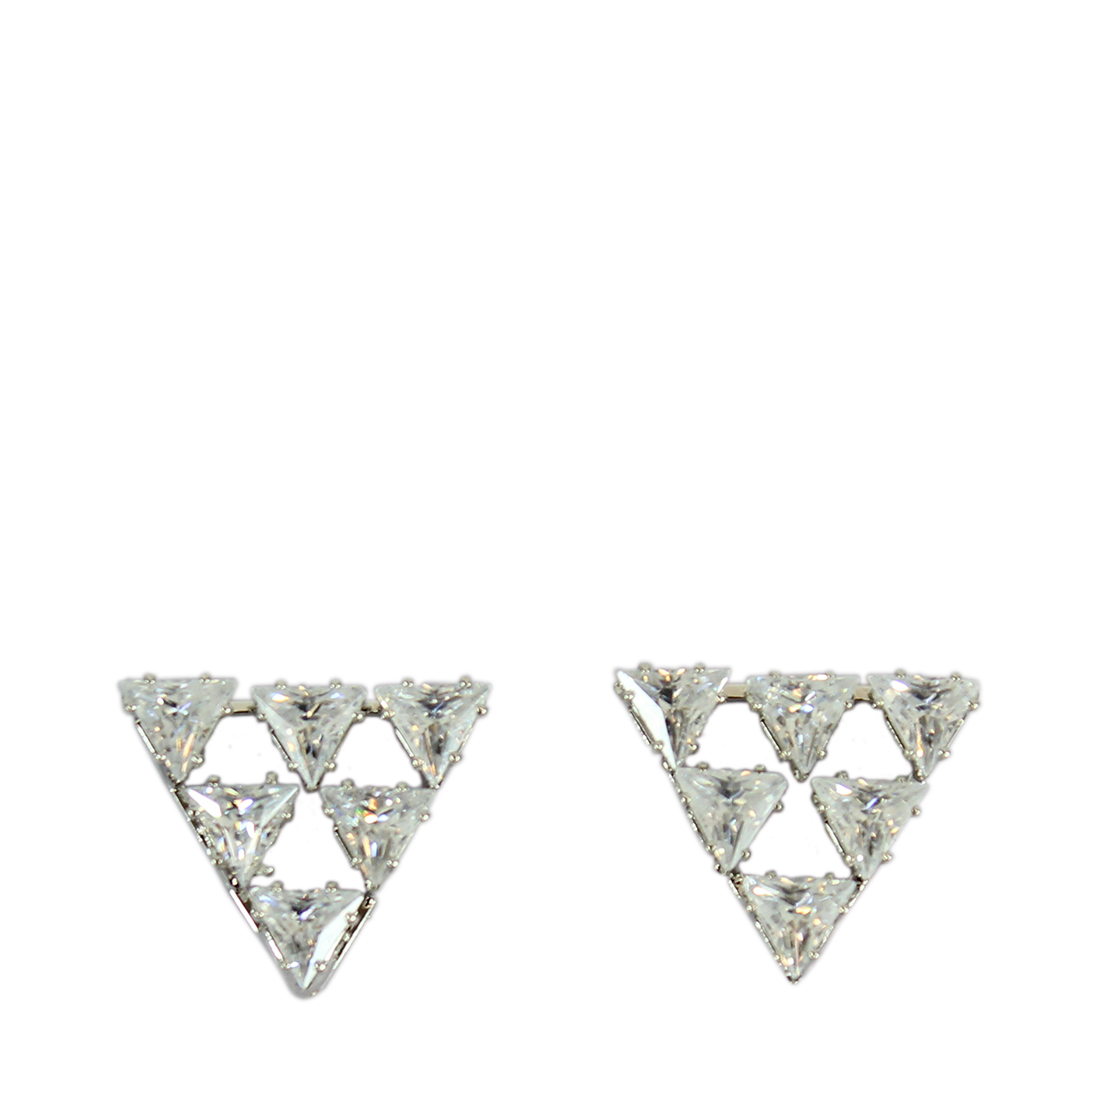 Triangle diamonds design